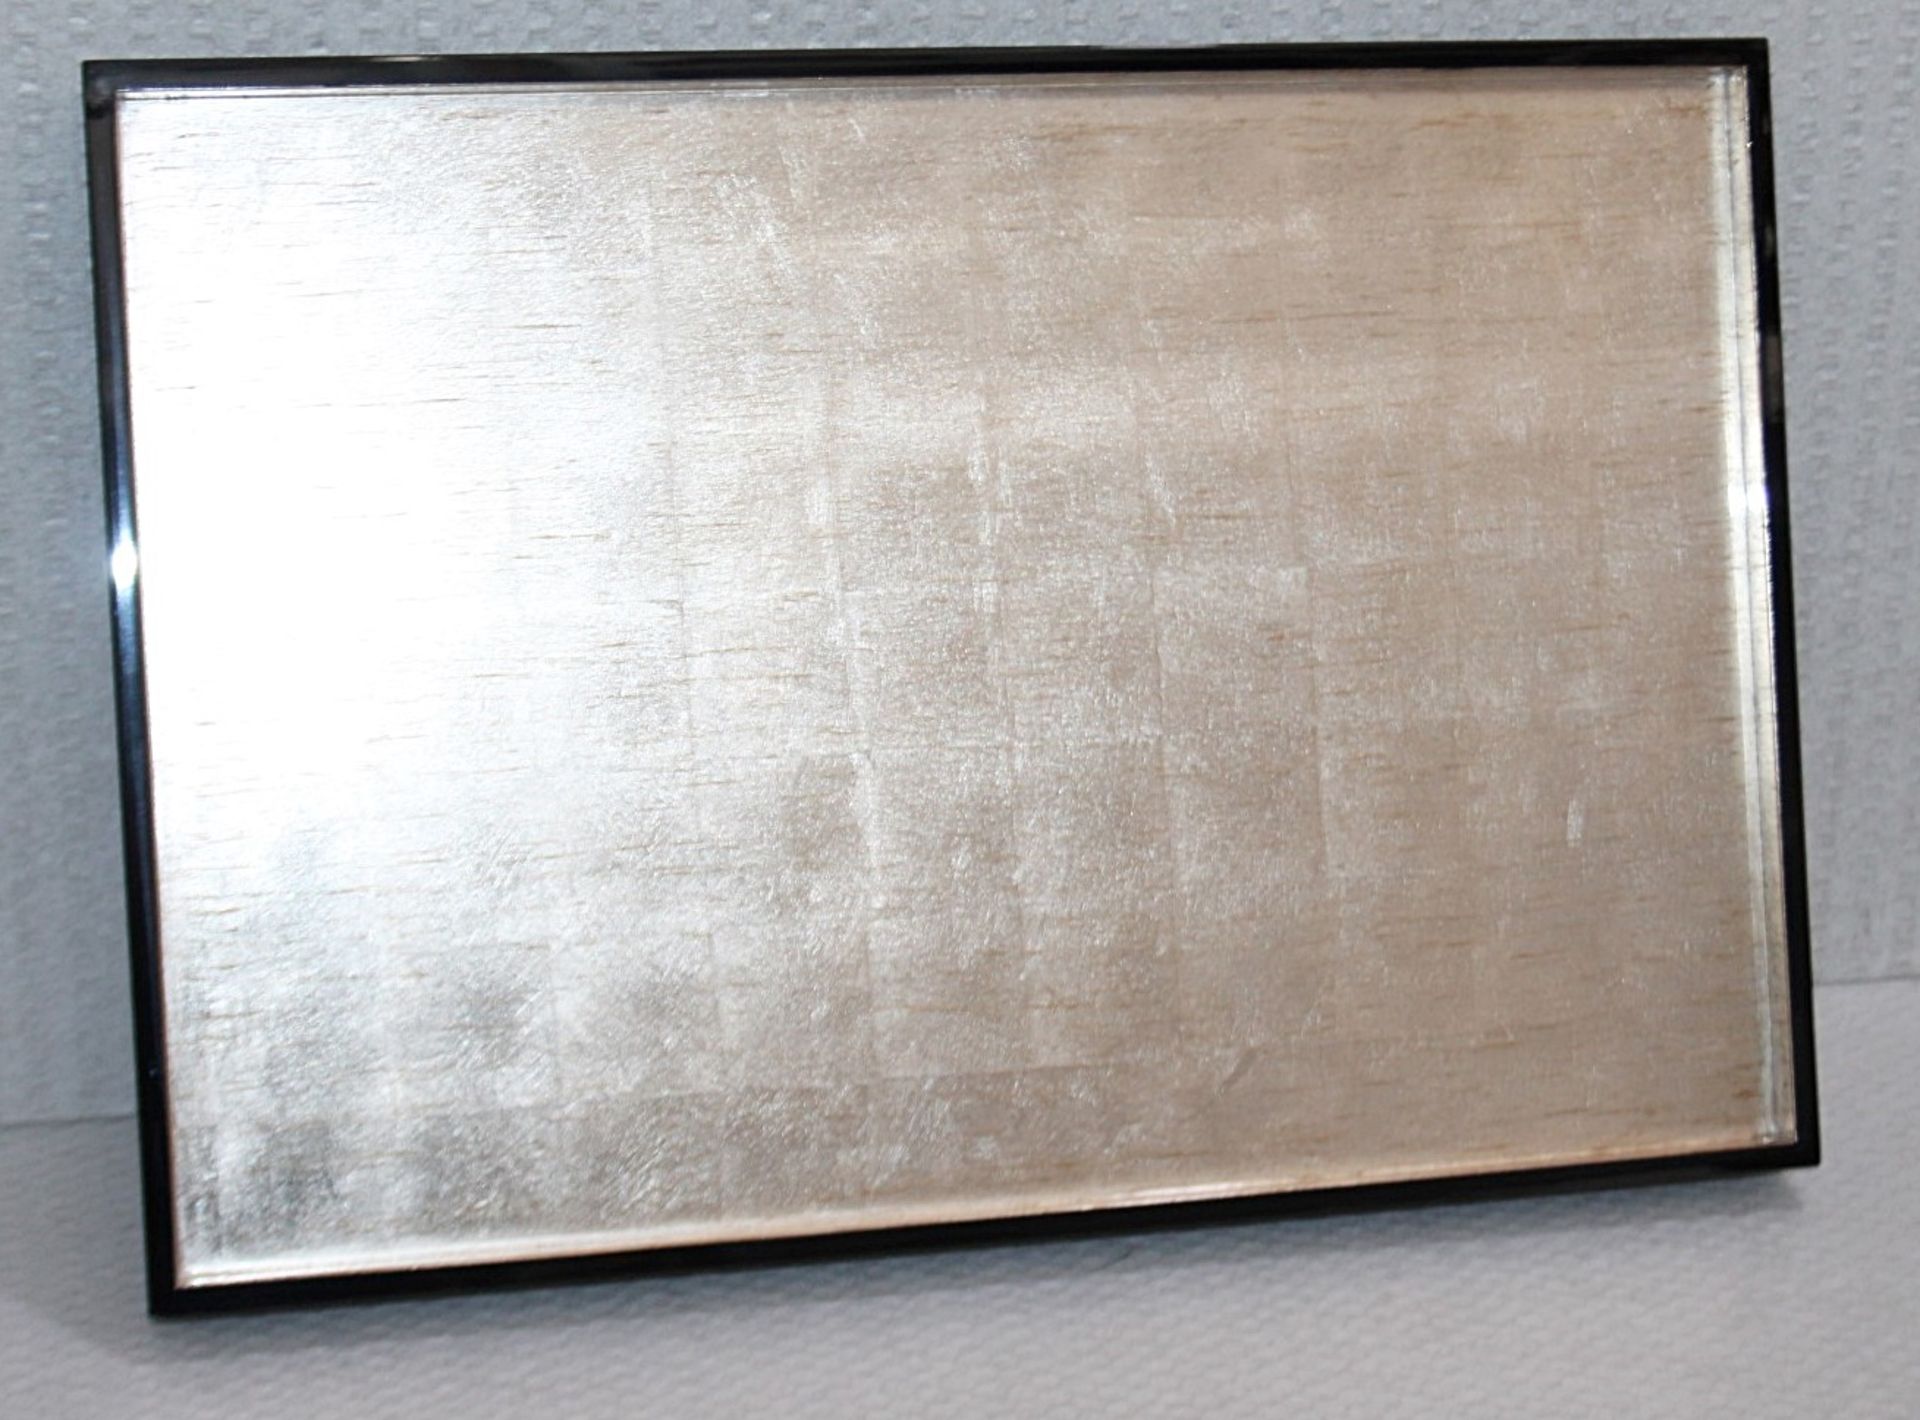 1 x POSH TRADING COMPANY Large Silver Leaf Windsor Tray (52cm x 36cm) - Original Price £160.00 - Image 3 of 9